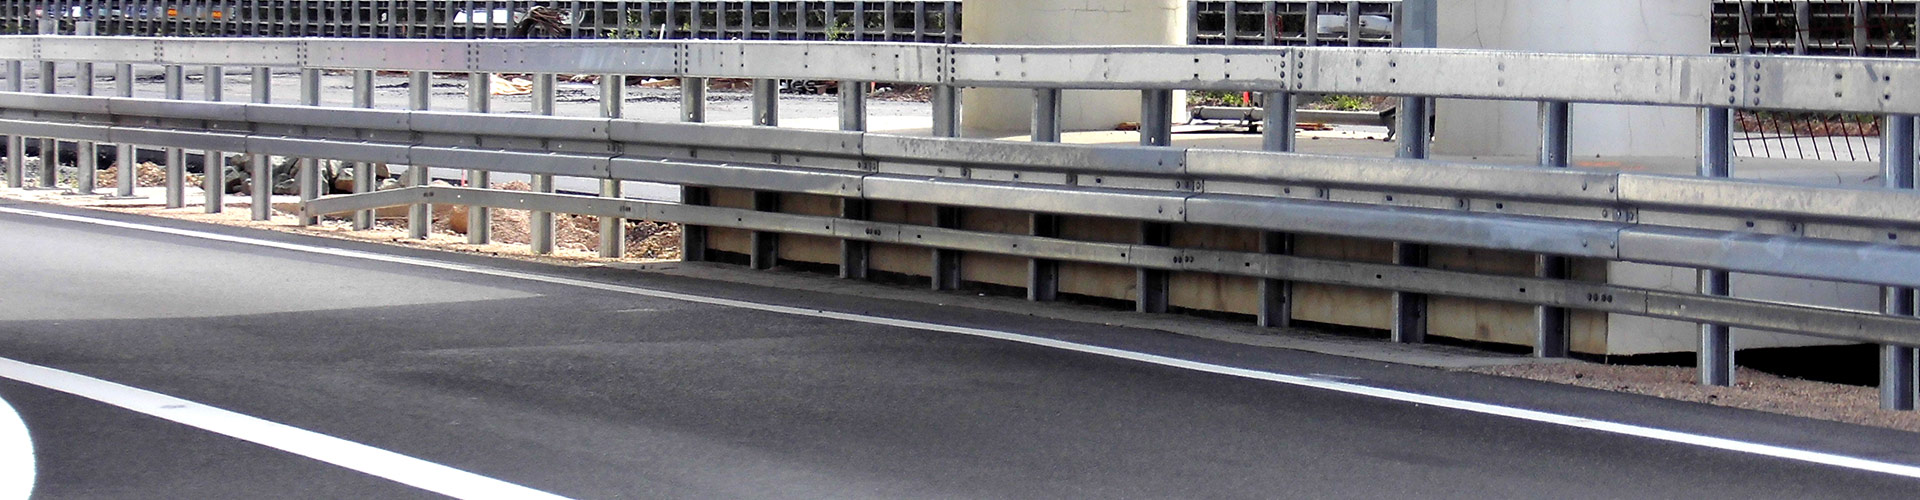 Fahrzeugrückhaltesysteme aus Stahl - superrails